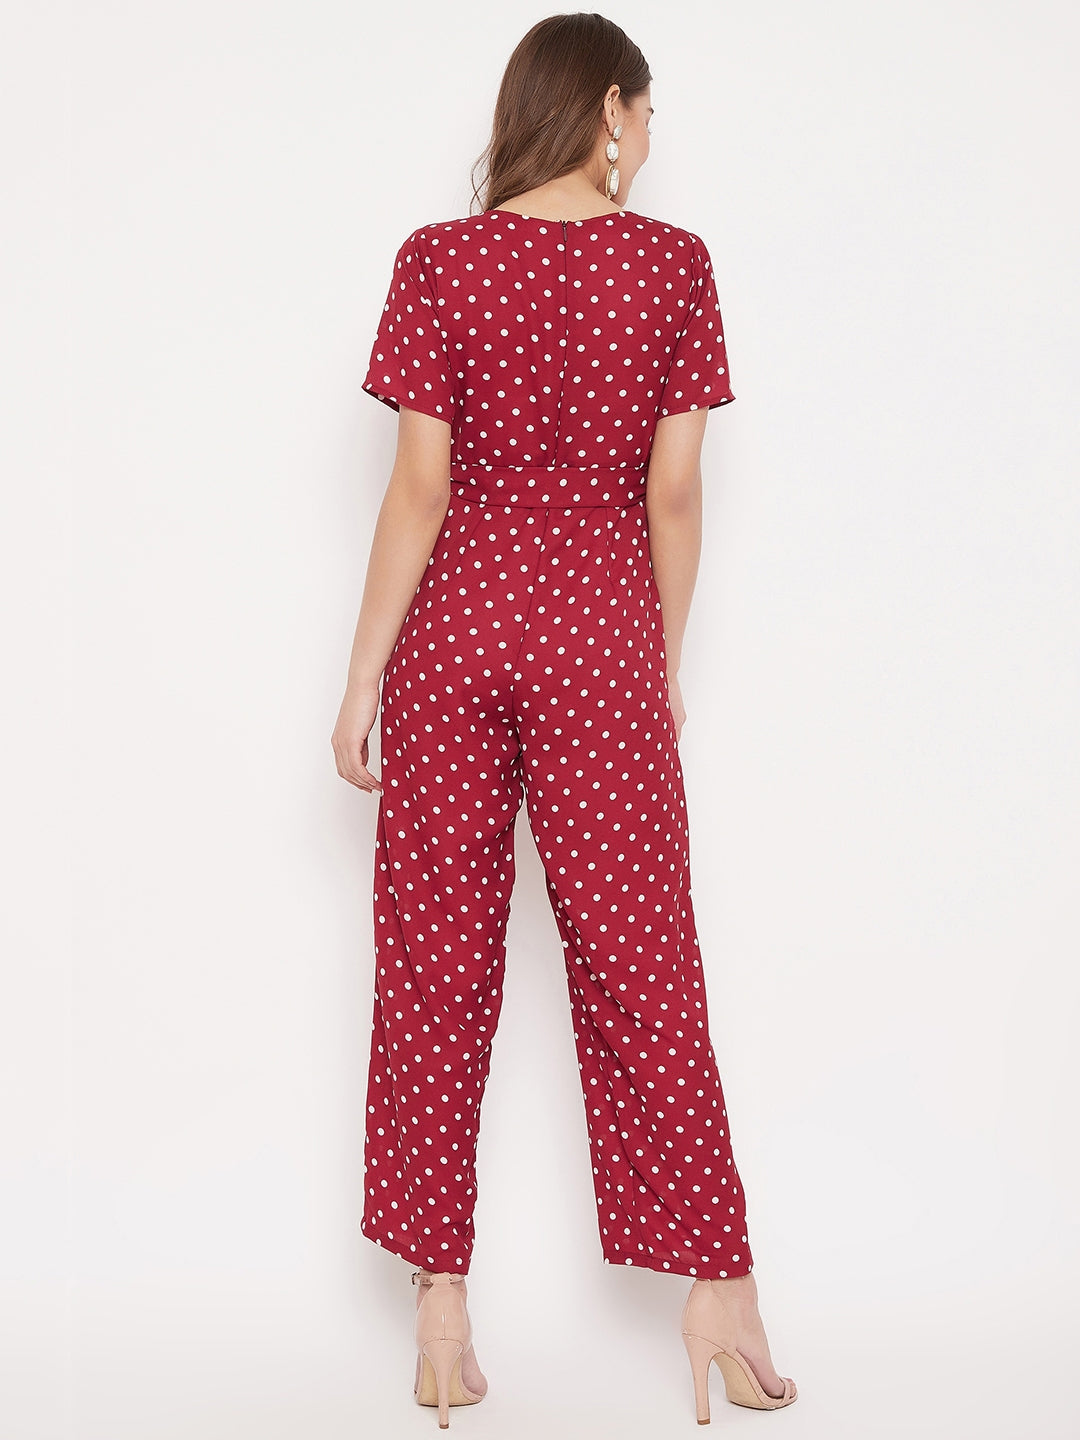 Berrylush Women Red & White Polka Dot Printed Jumpsuit